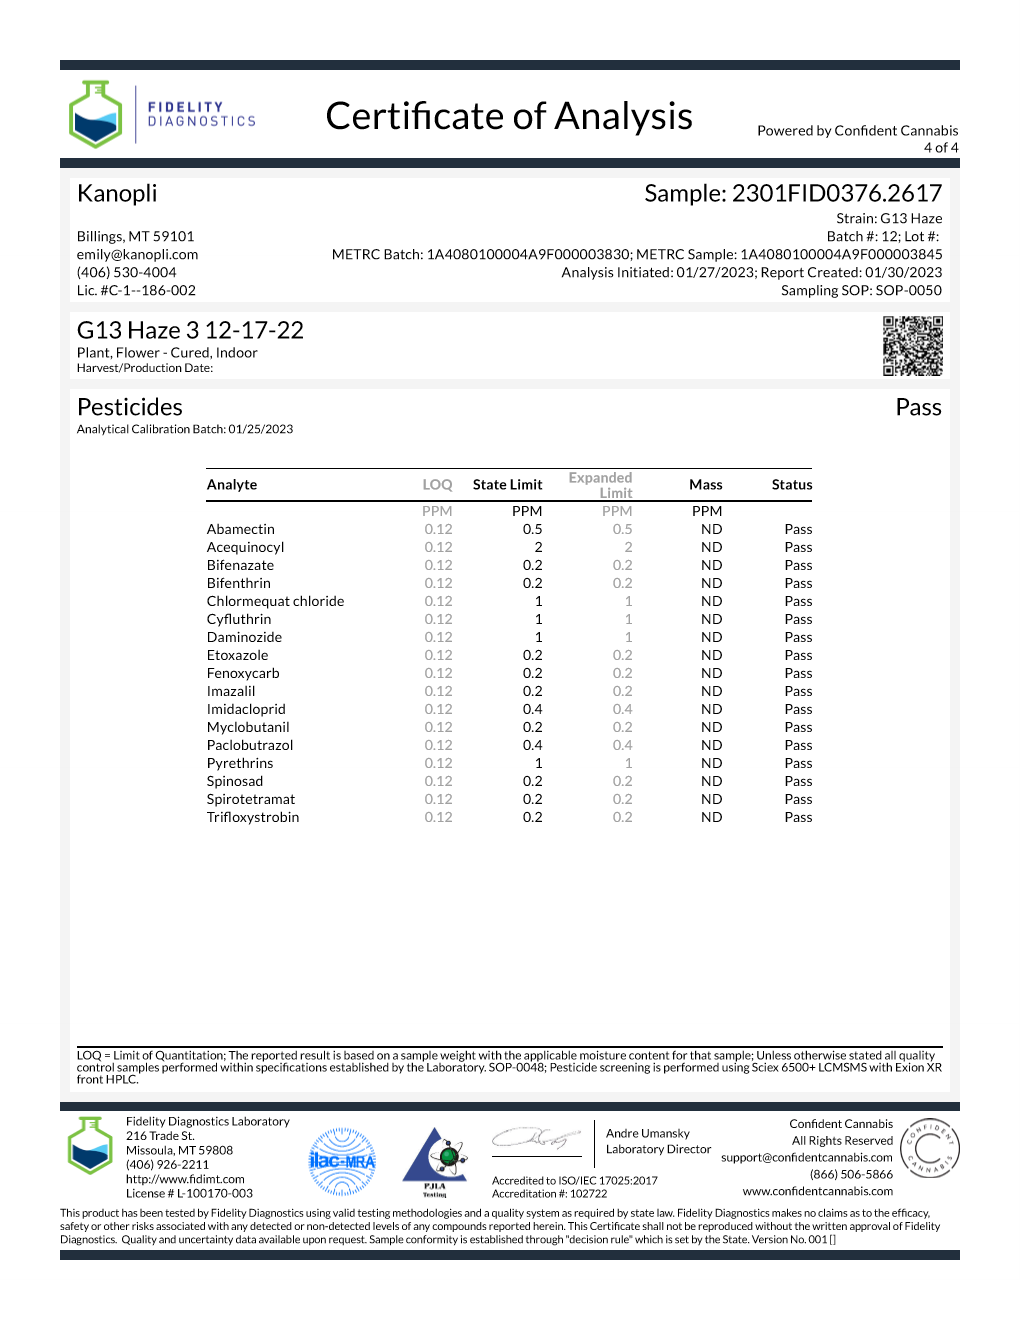 1 oz. G13 Haze - Hybrid shake (16.94% THC) Dec. 2022 (28 grams)